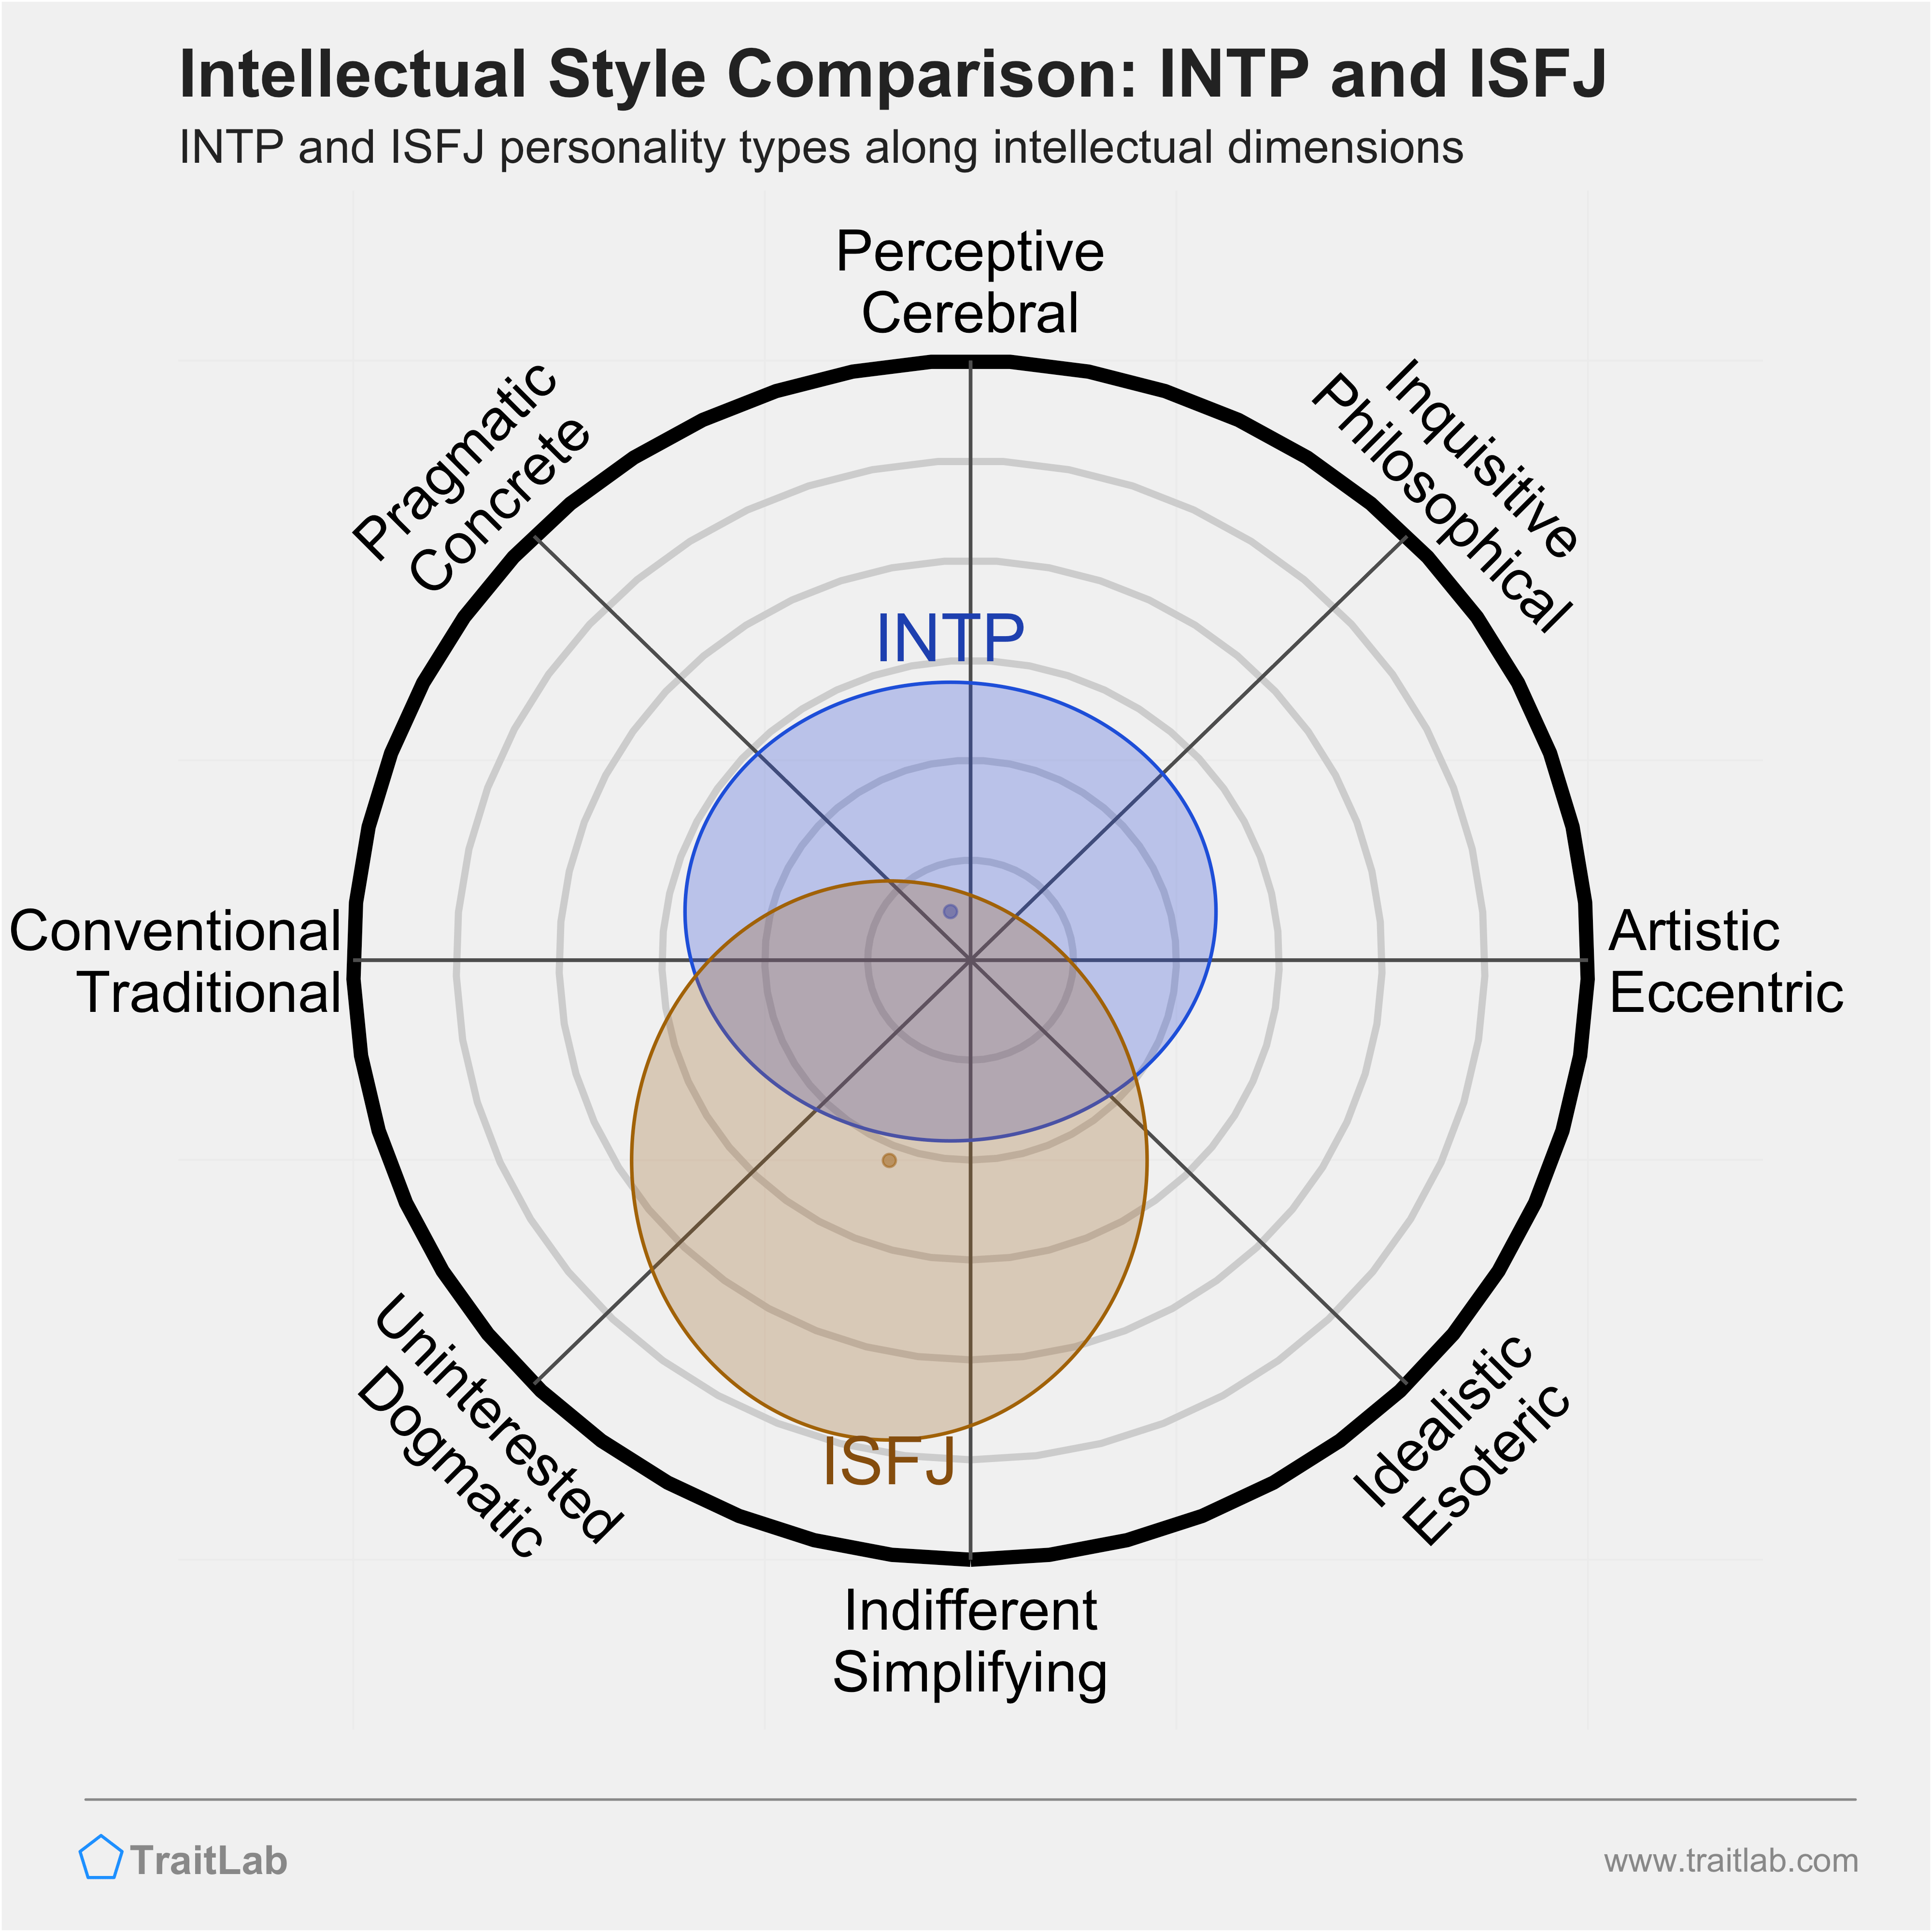 INTP and ISFJ comparison across intellectual dimensions